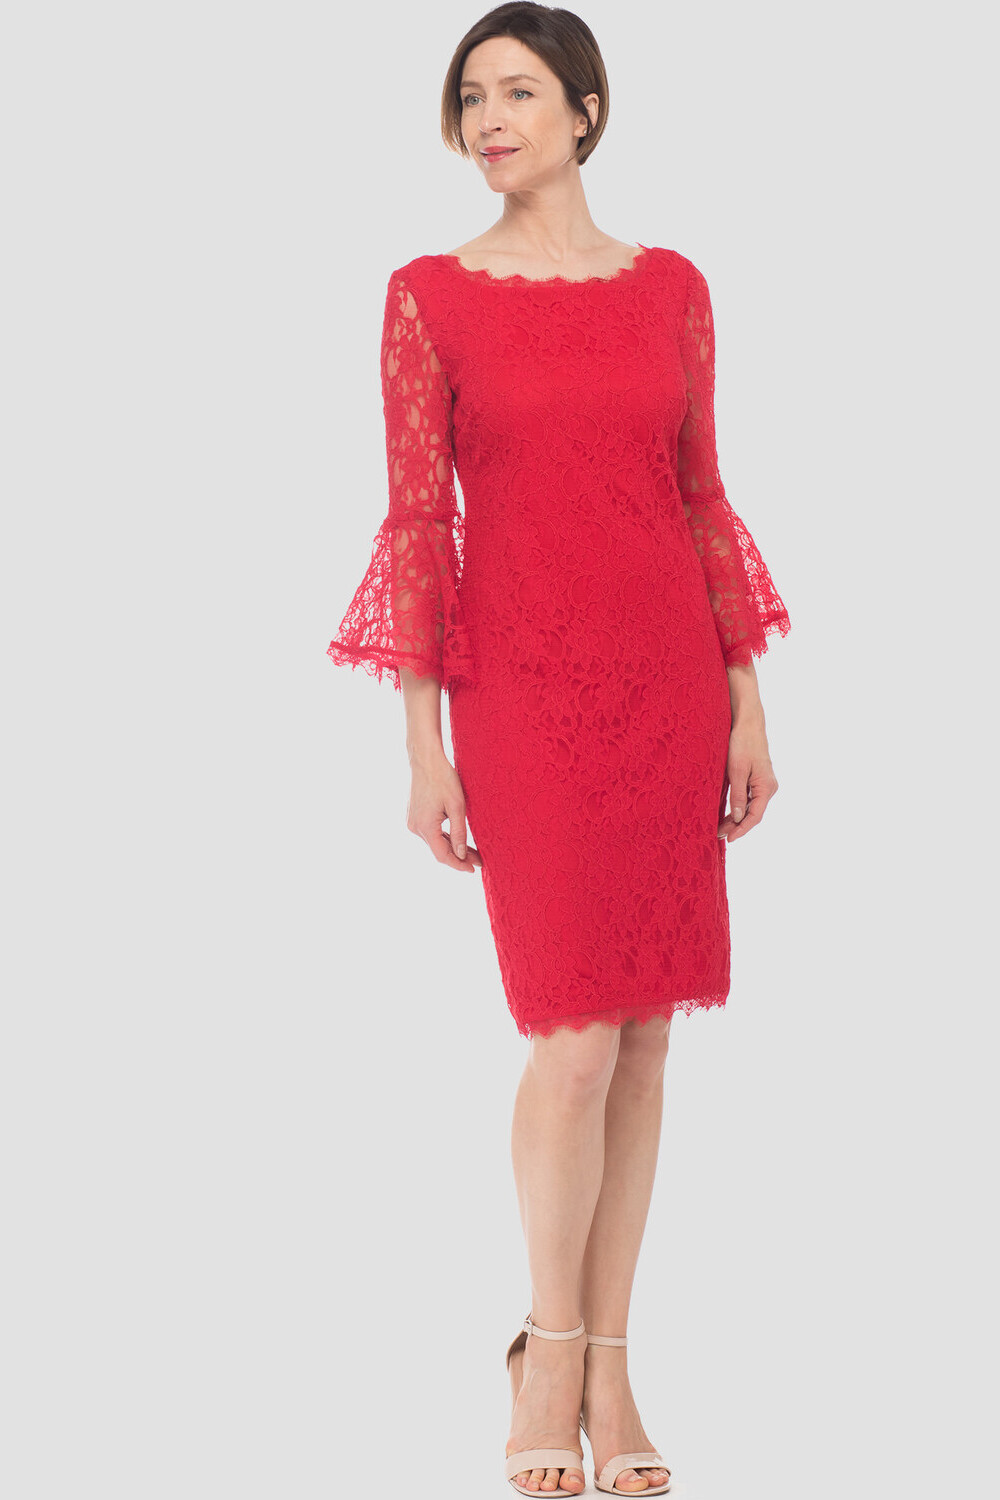 Joseph Ribkoff dress style 183500. Red